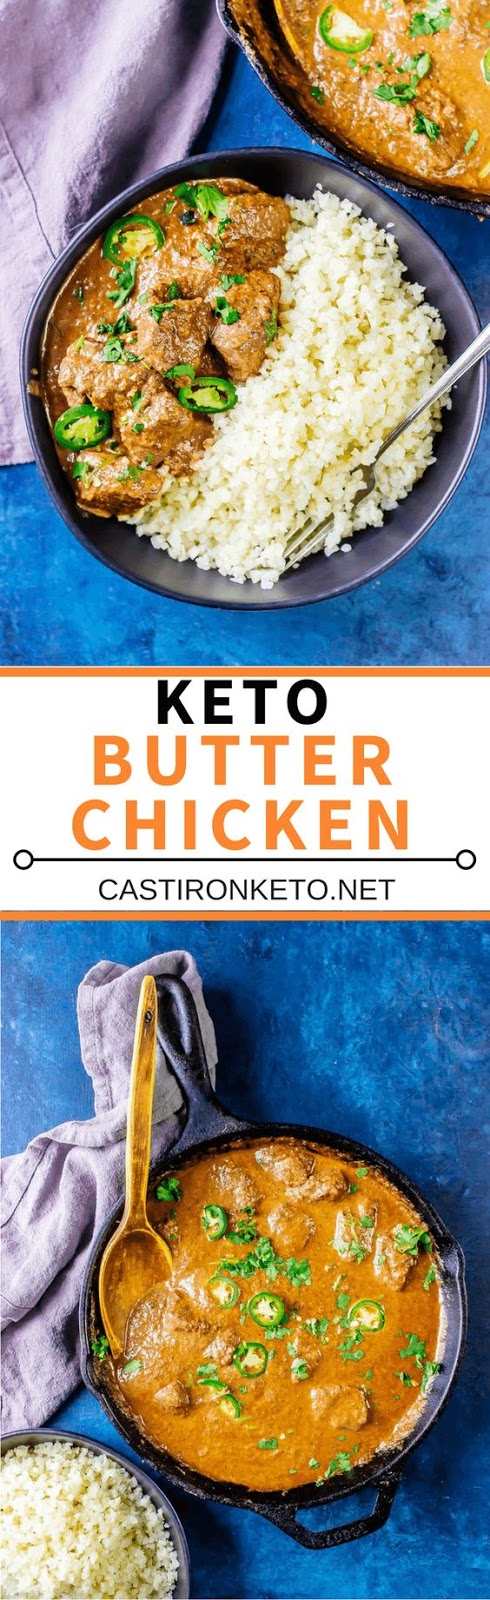 Keto Butter Chicken - BEST RECIPES